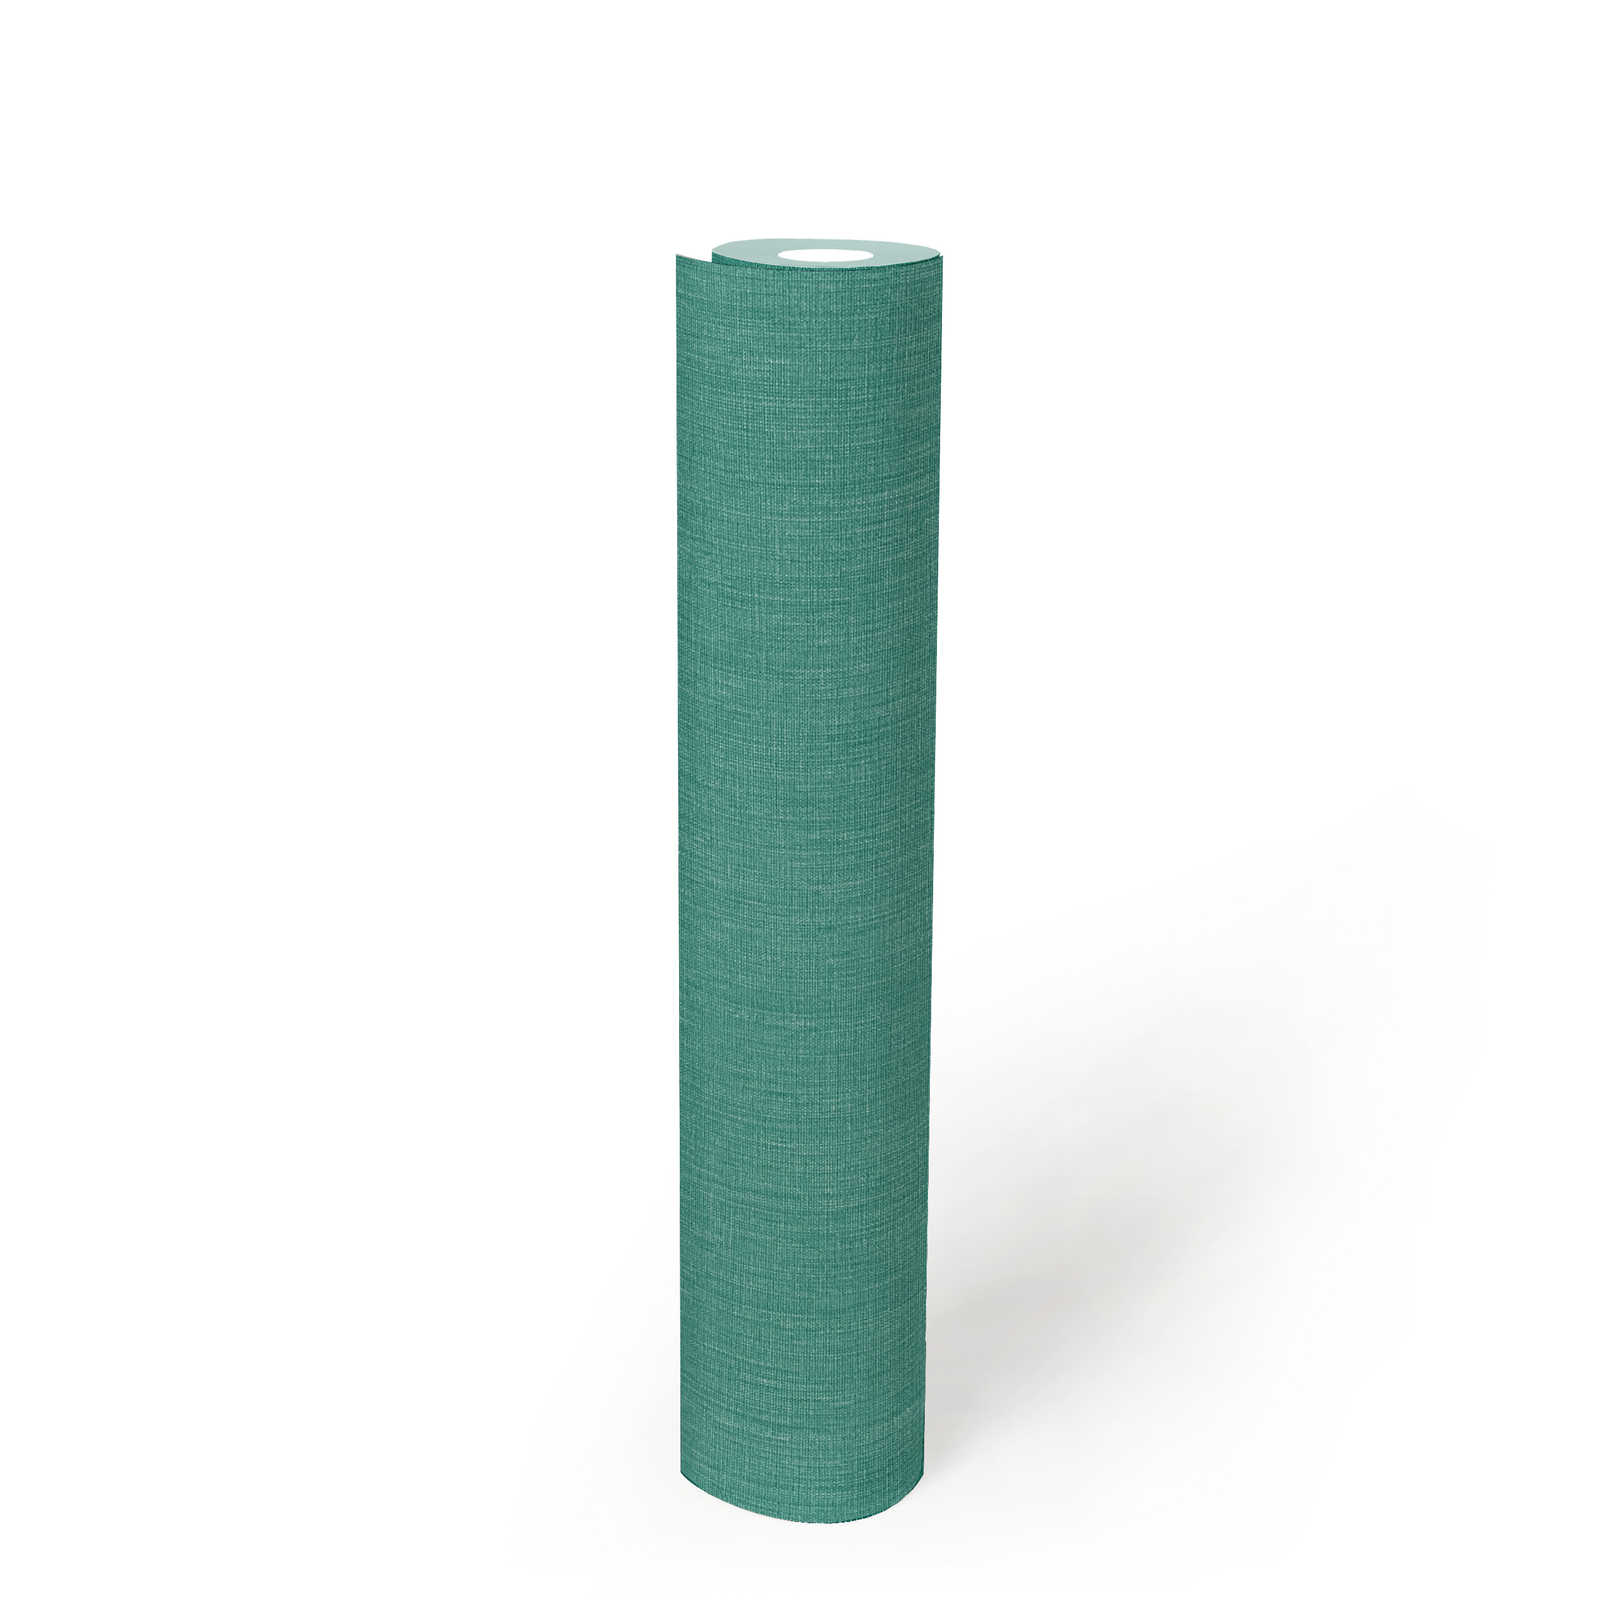             Plain wallpaper with texture on non-woven in matt look - green, blue
        